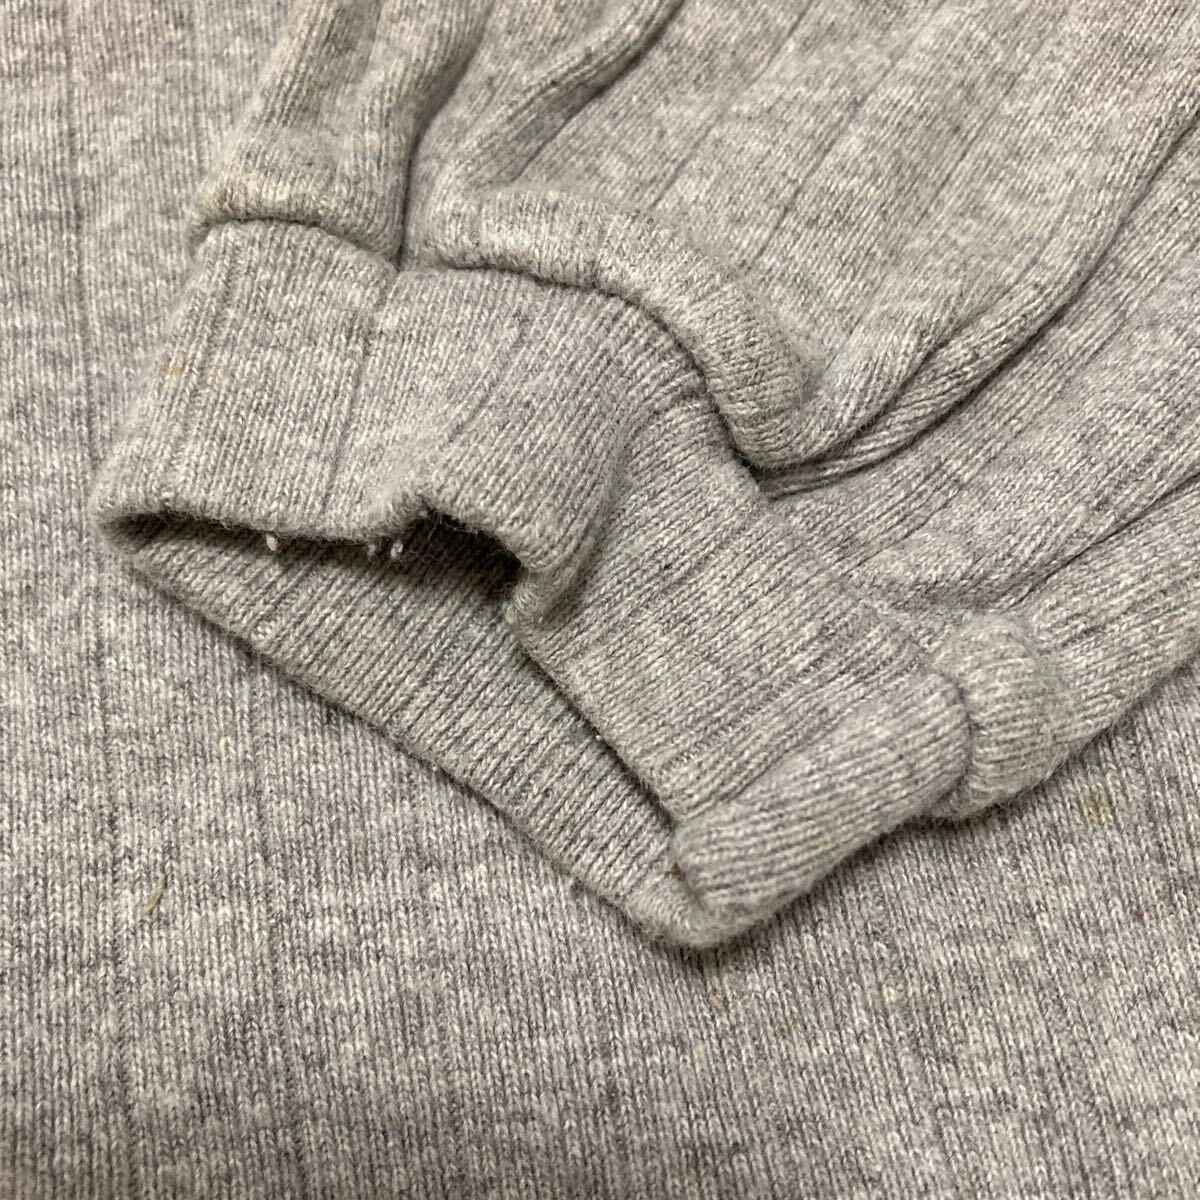  Oshkosh 5* cut and sewn *105~110* long sleeve * gray 66-246 20